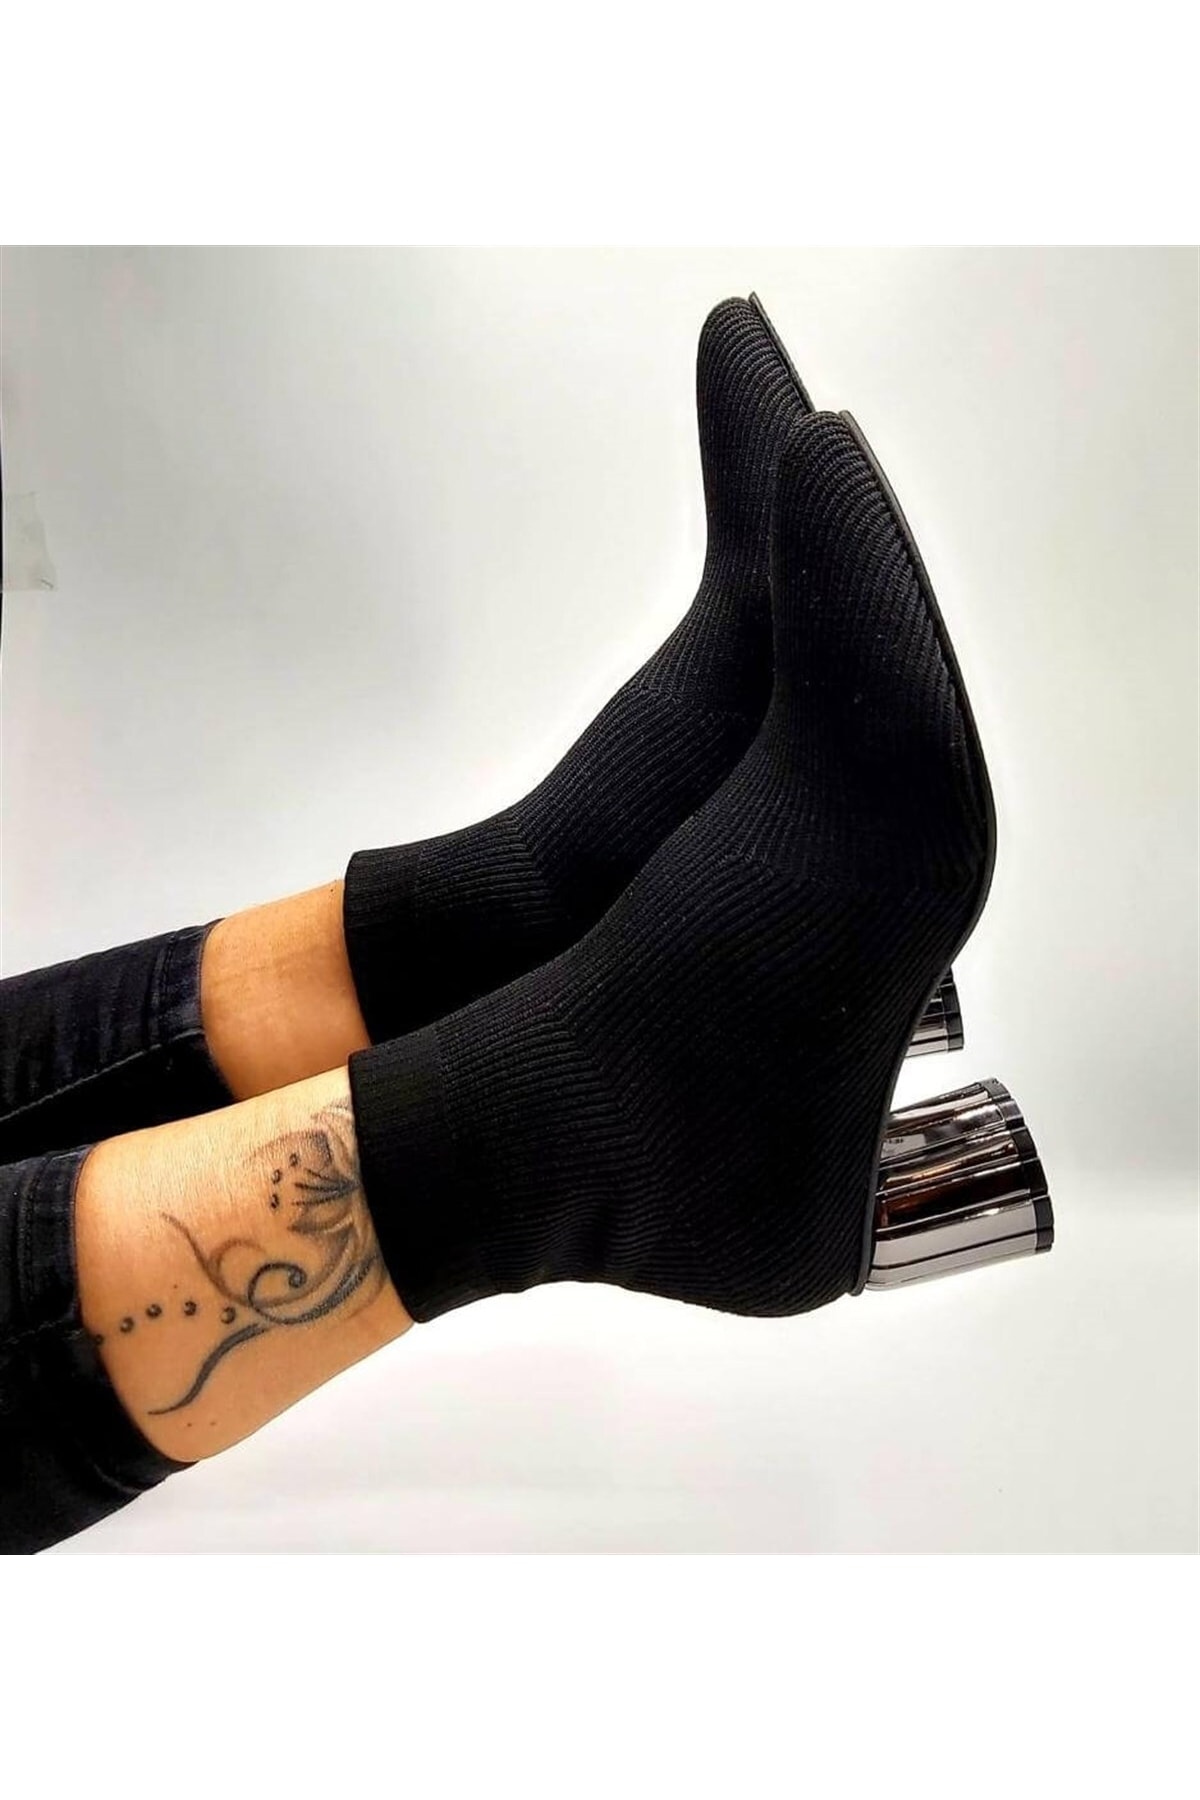 CassidoShoes Triko Çoraplı Likralı Metal Topuk Bot 037-005